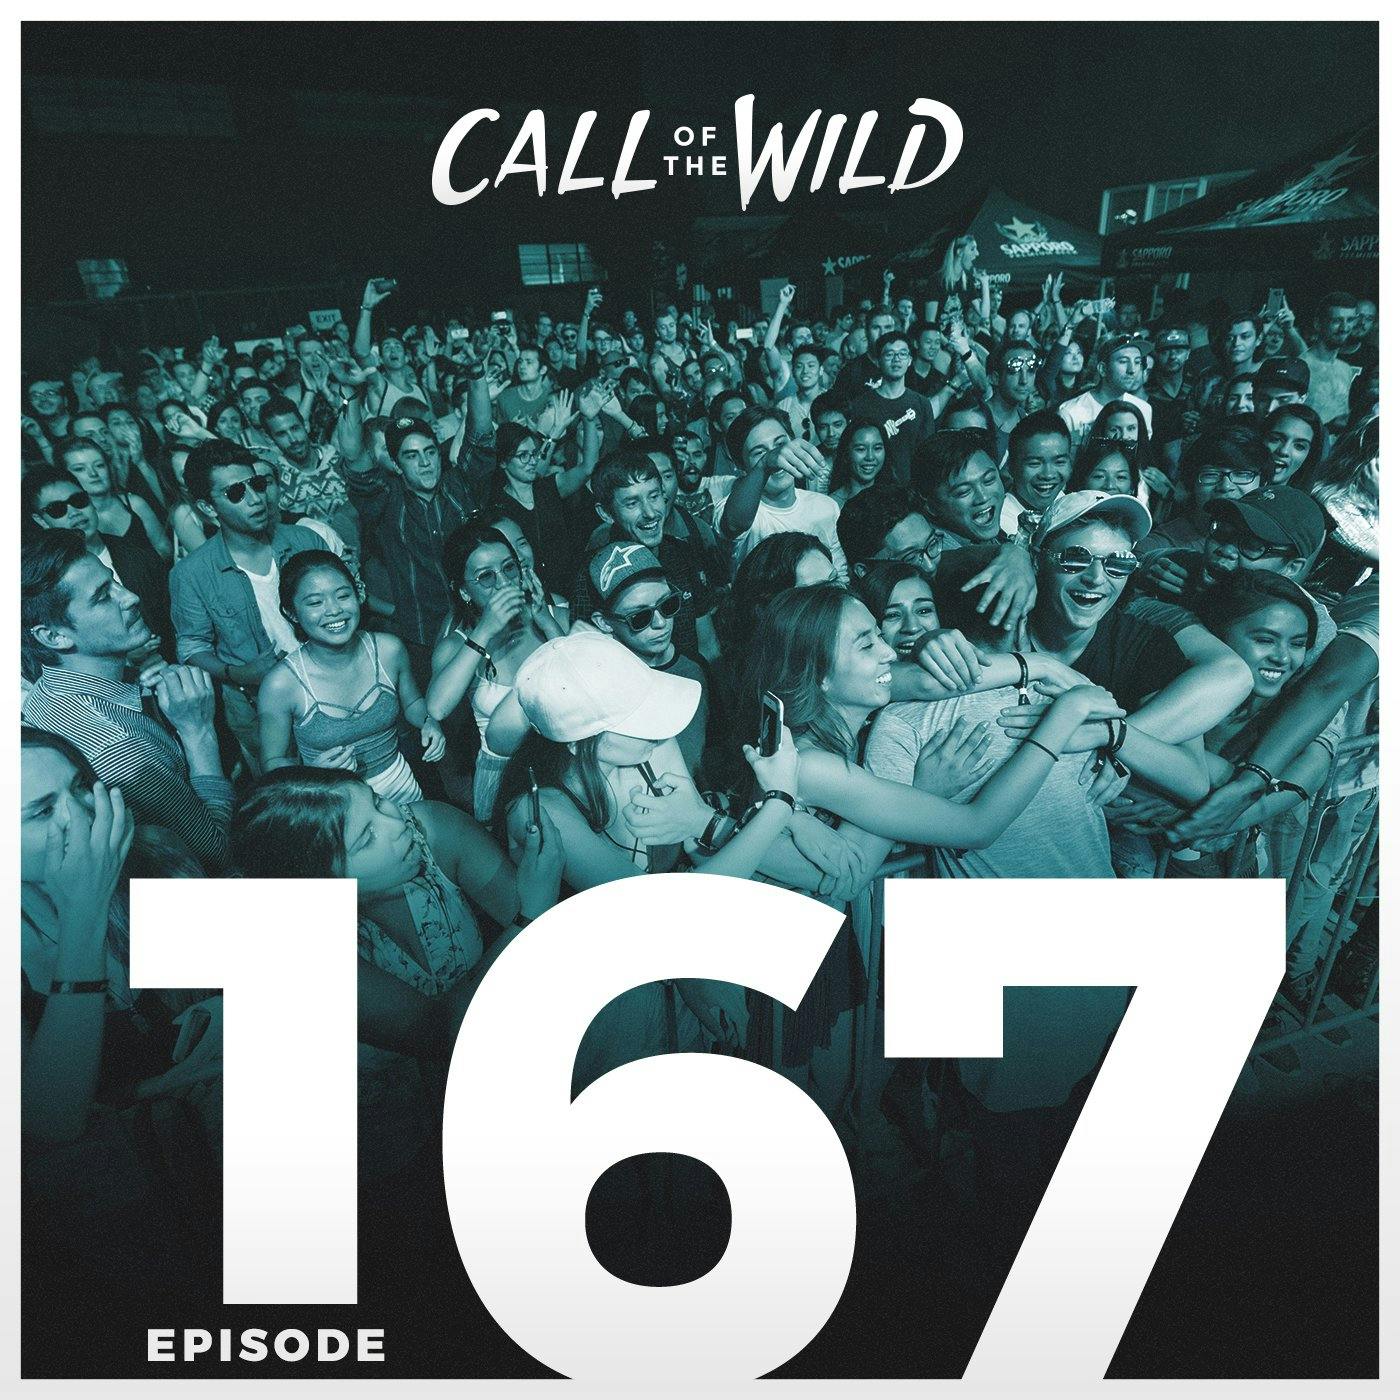 #167 - Monstercat: Call of the Wild (Compound 2017 Soundbites)